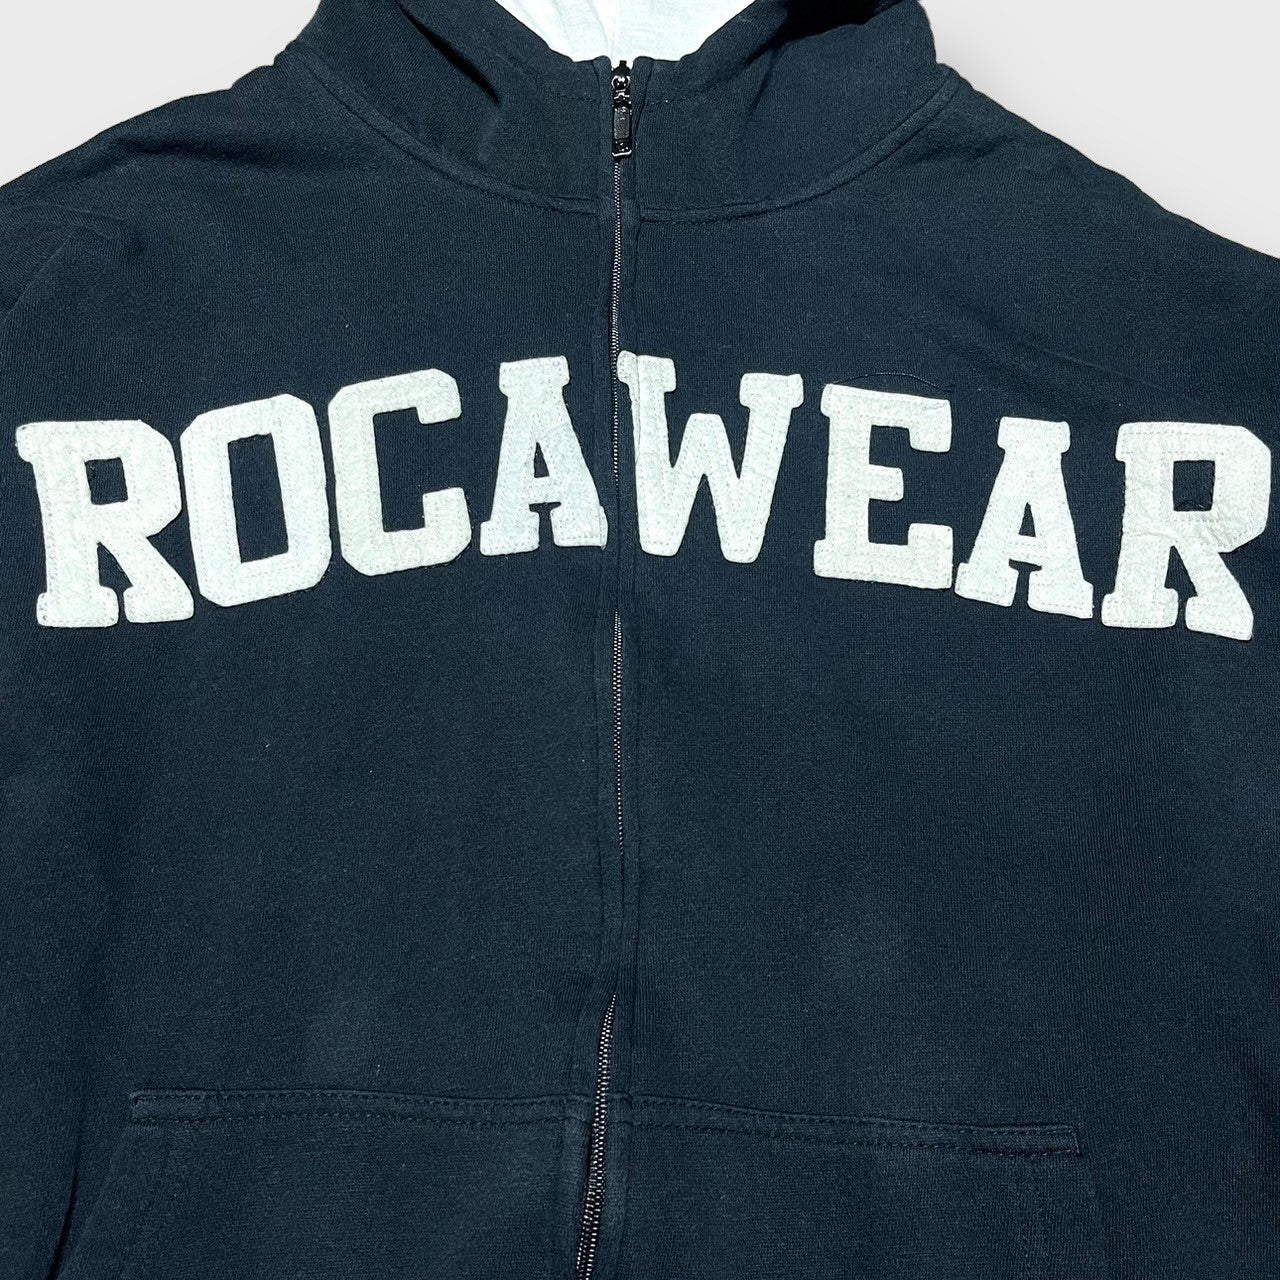 "ROCAWEAR" Logo design full zip hoodie